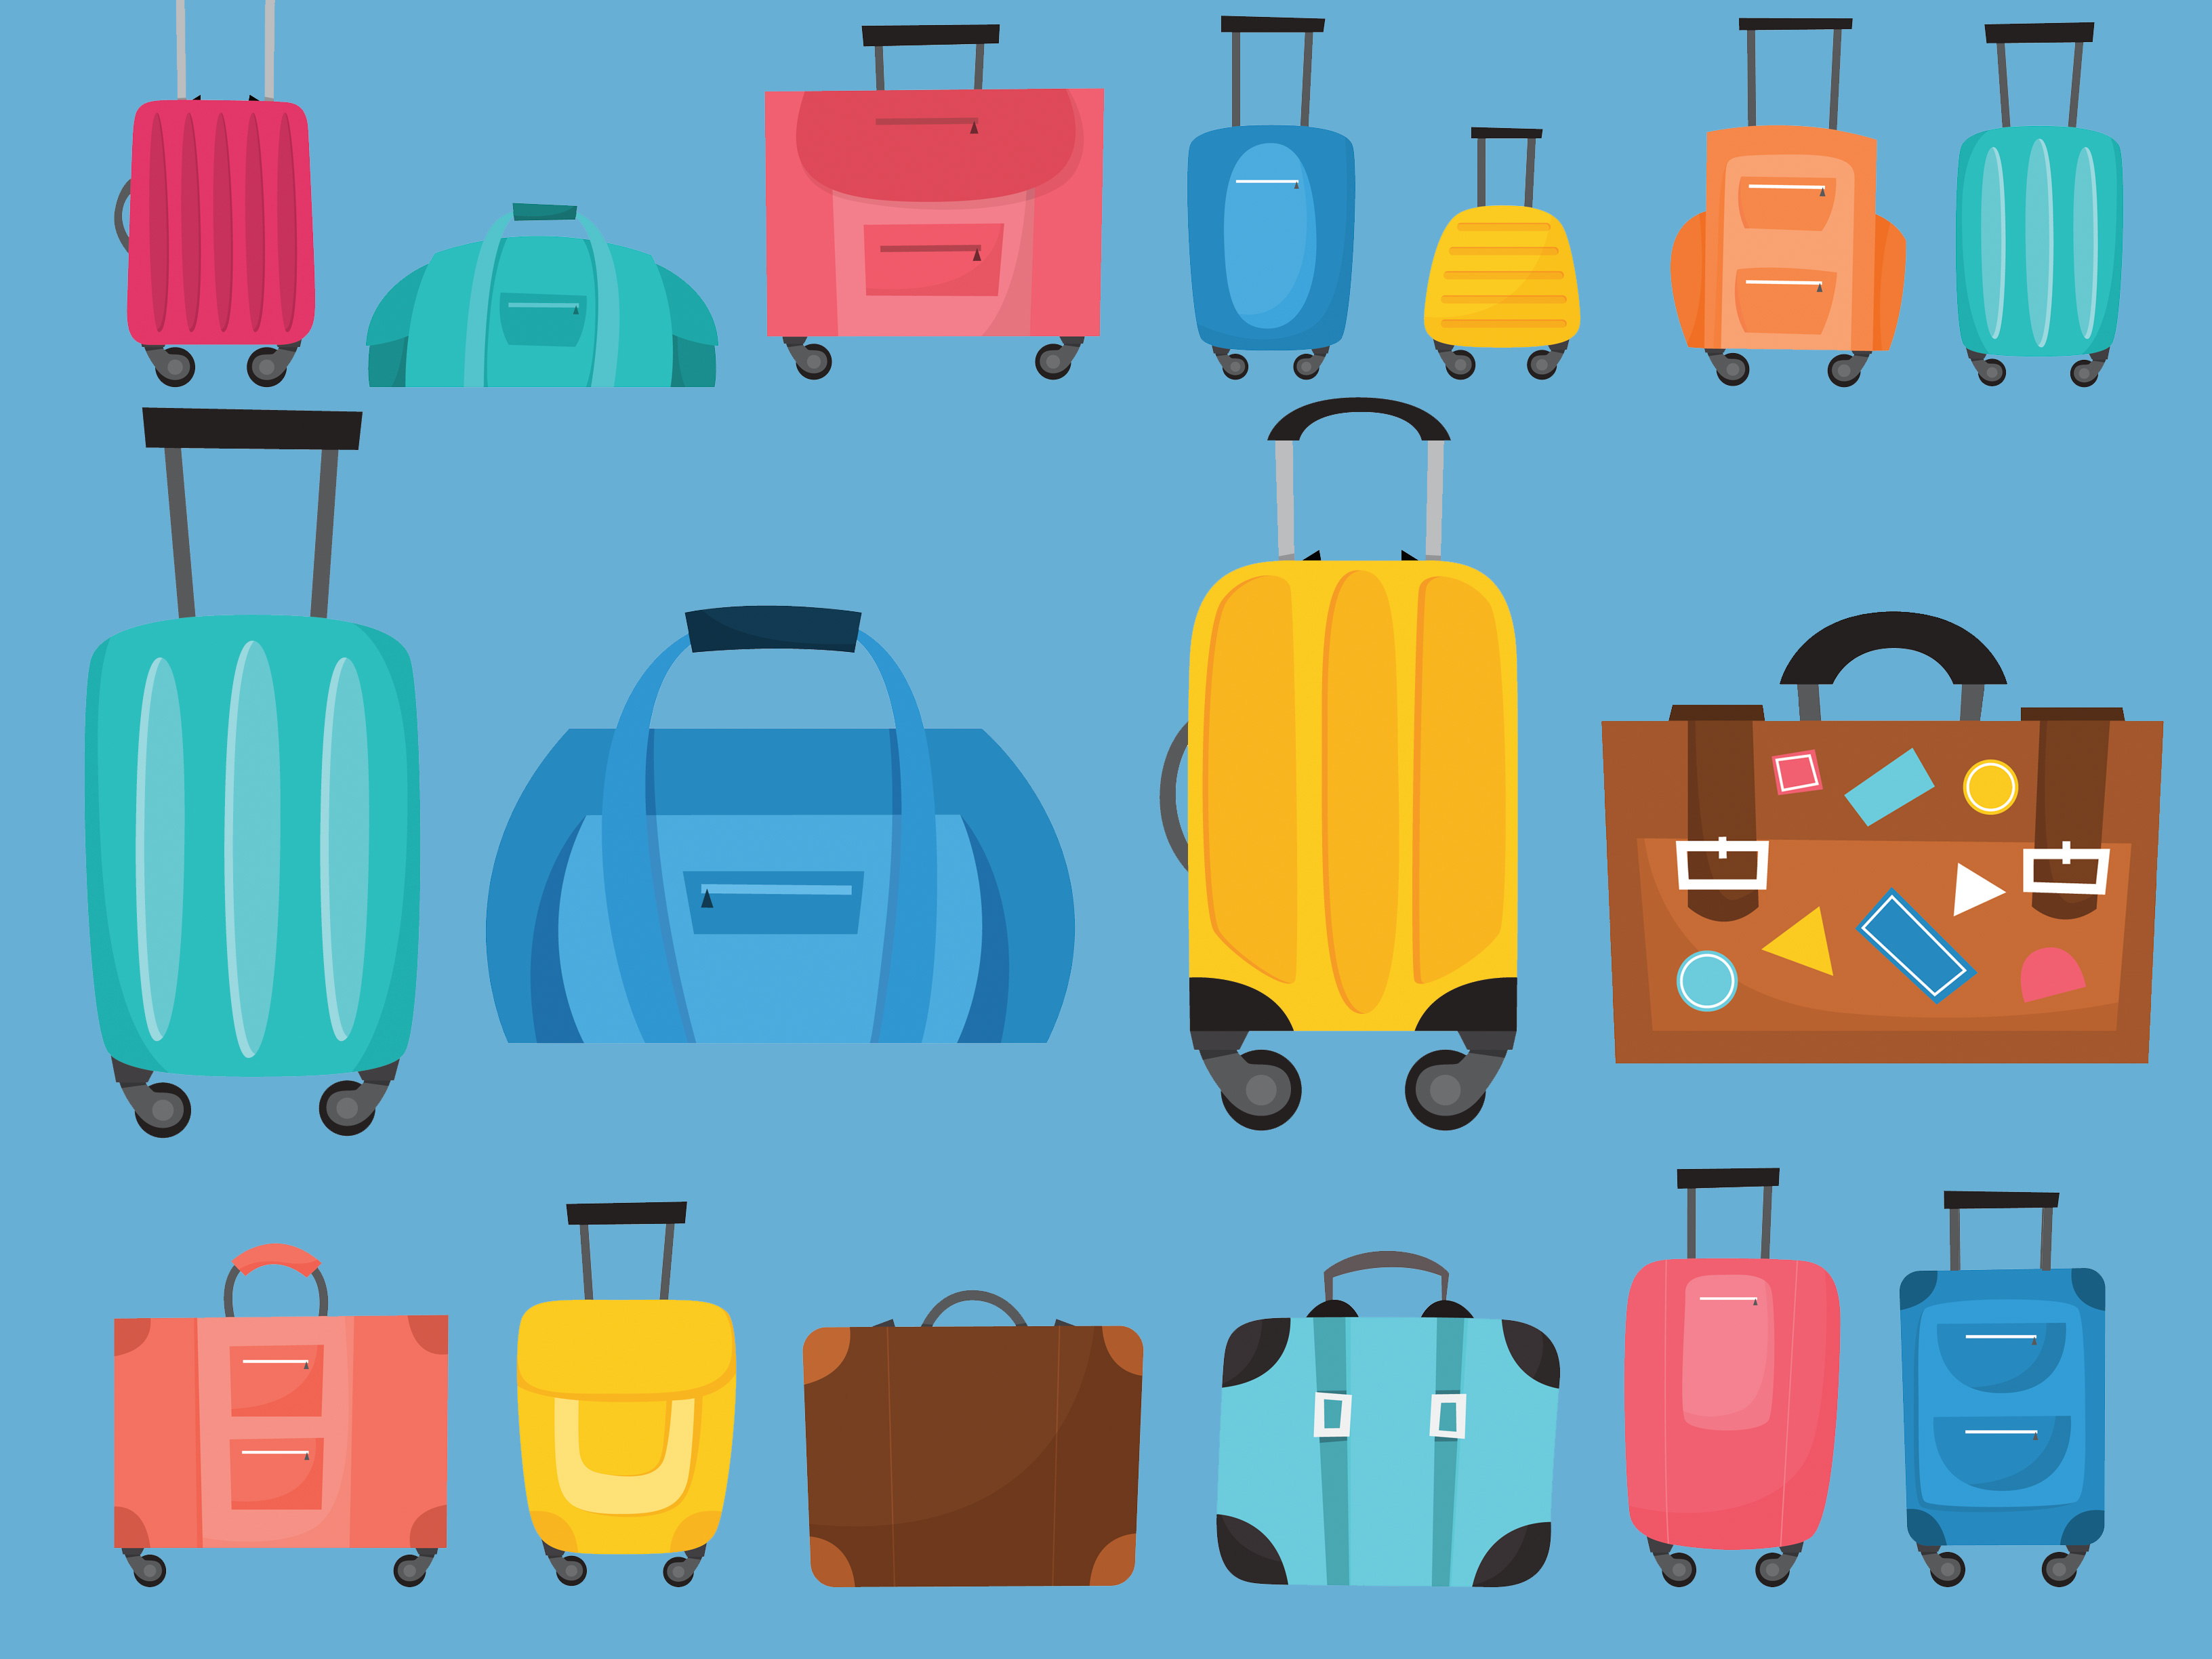 suitcase sizes for international travel